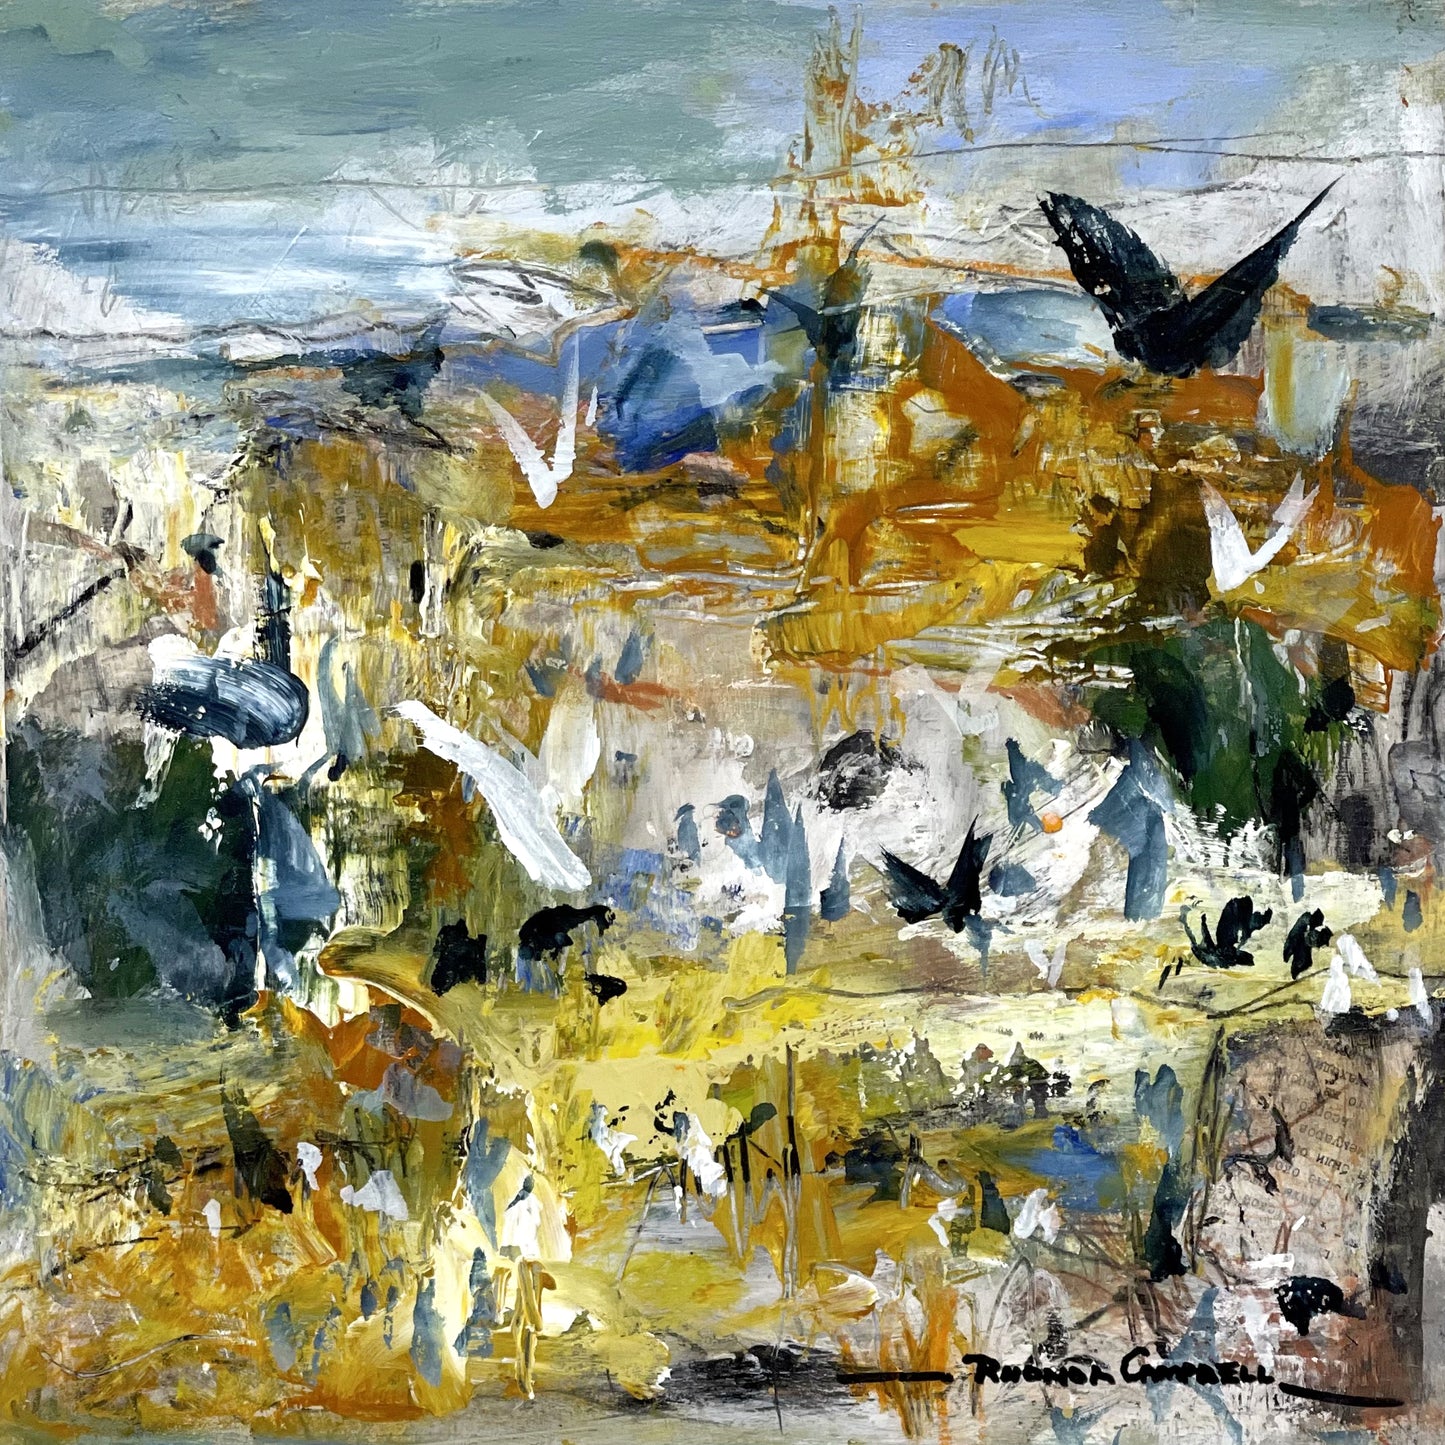 Birds on the wetland